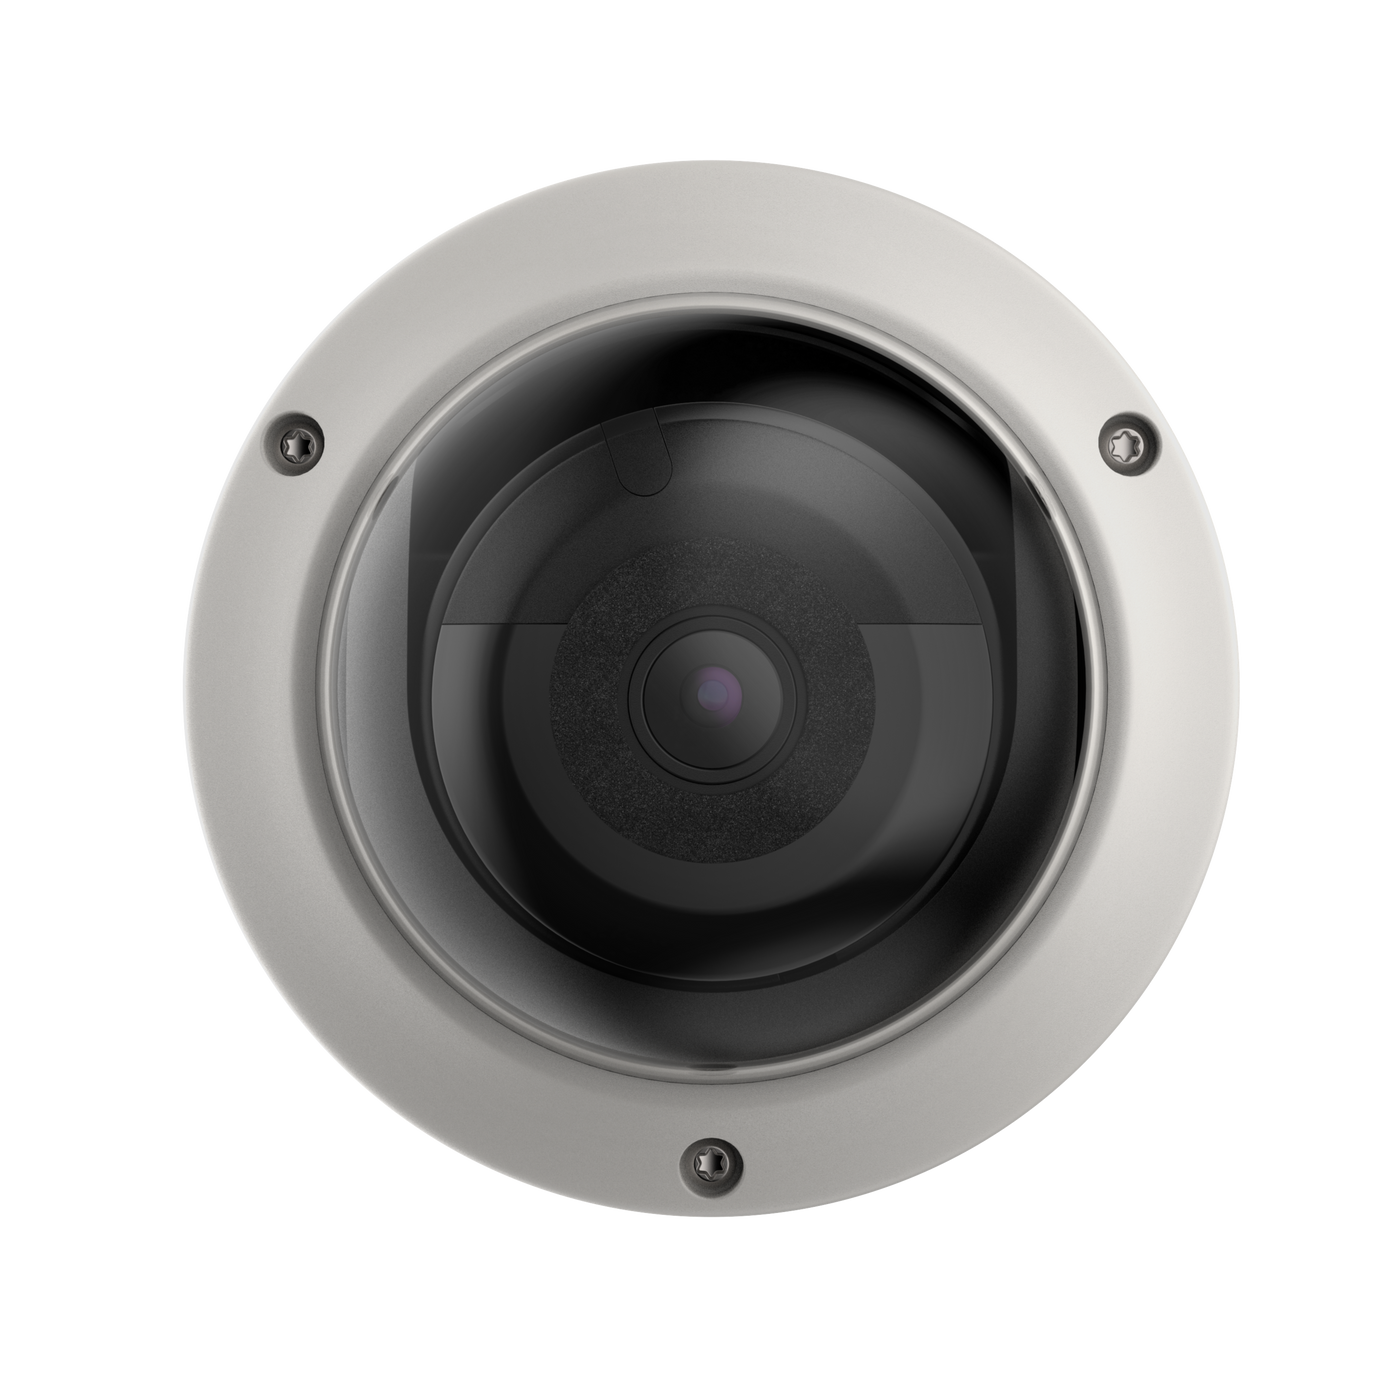 RV Dome Security Camera